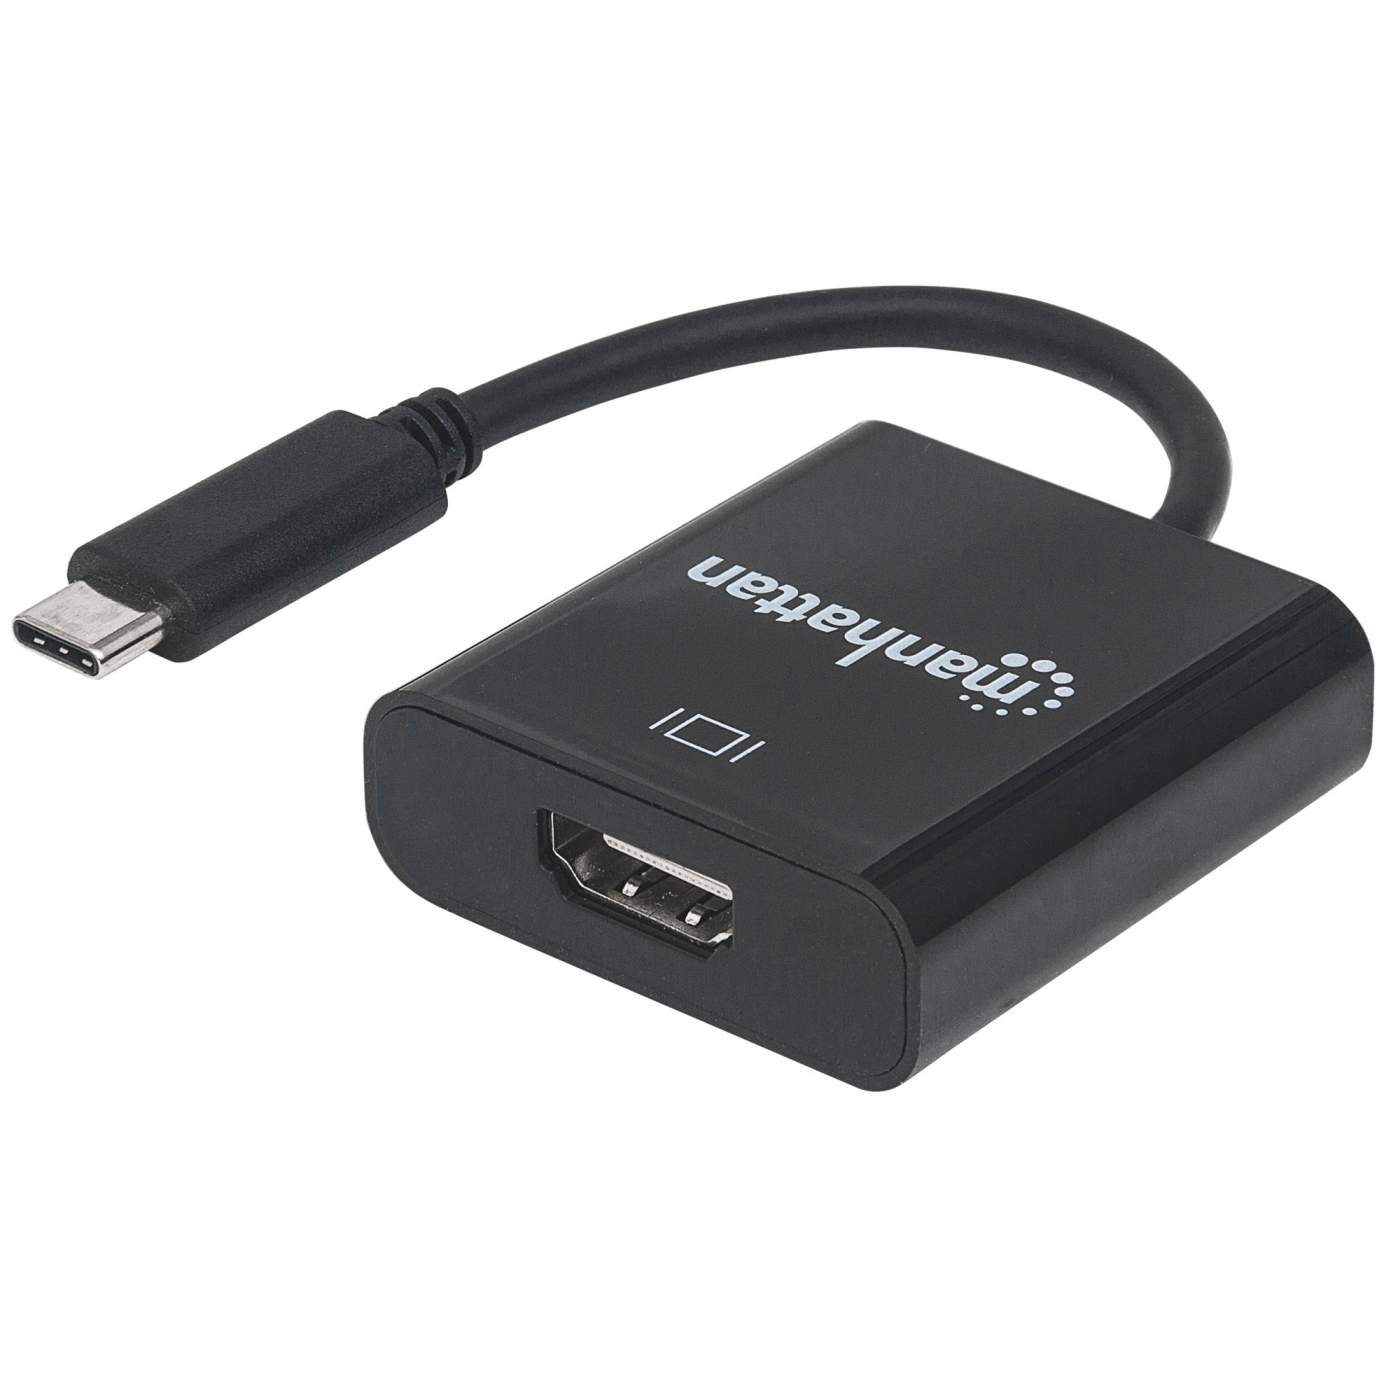 CONVERTIDOR TIPO C A HDMI,Convertidor,USB-C a HDMI, VGA, Hub, que